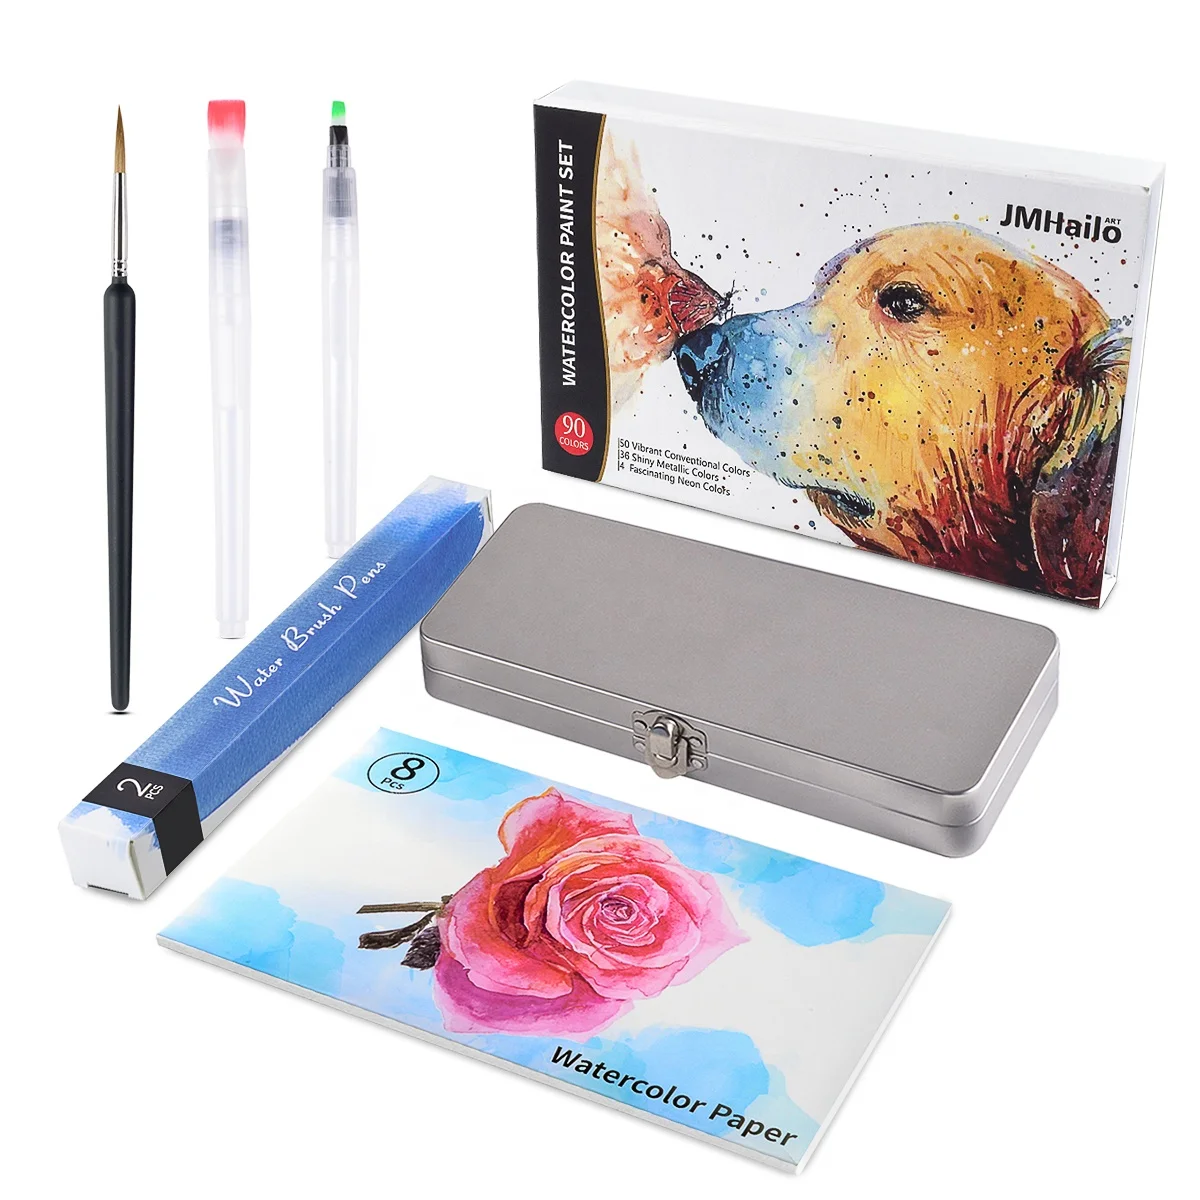 Metallic Watercolor Paint Set with Water Brush Pen (8 Colors)